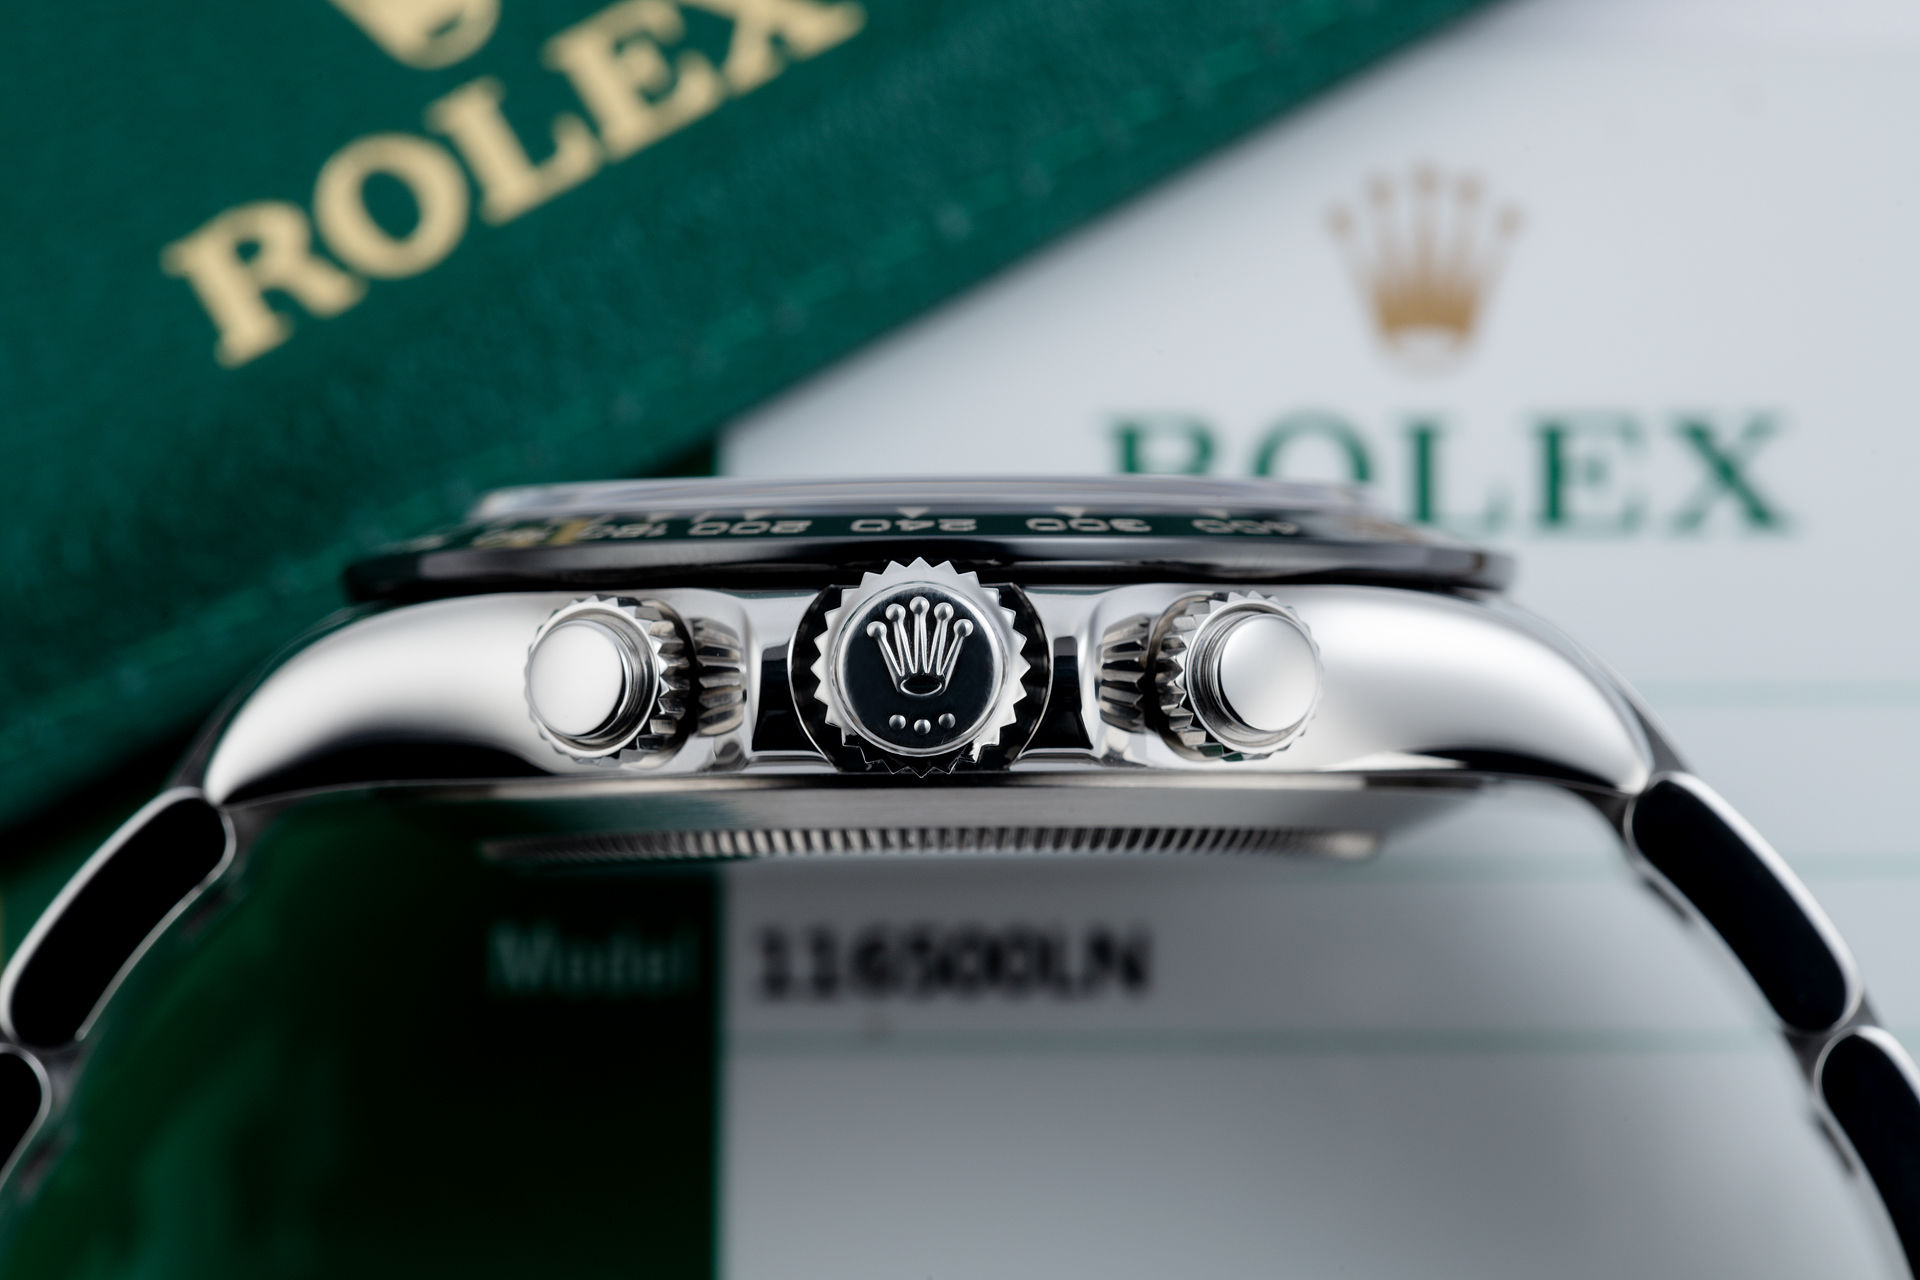 ref 116500LN | 5 Year Warranty 'Full Set' | Rolex Cosmograph Daytona